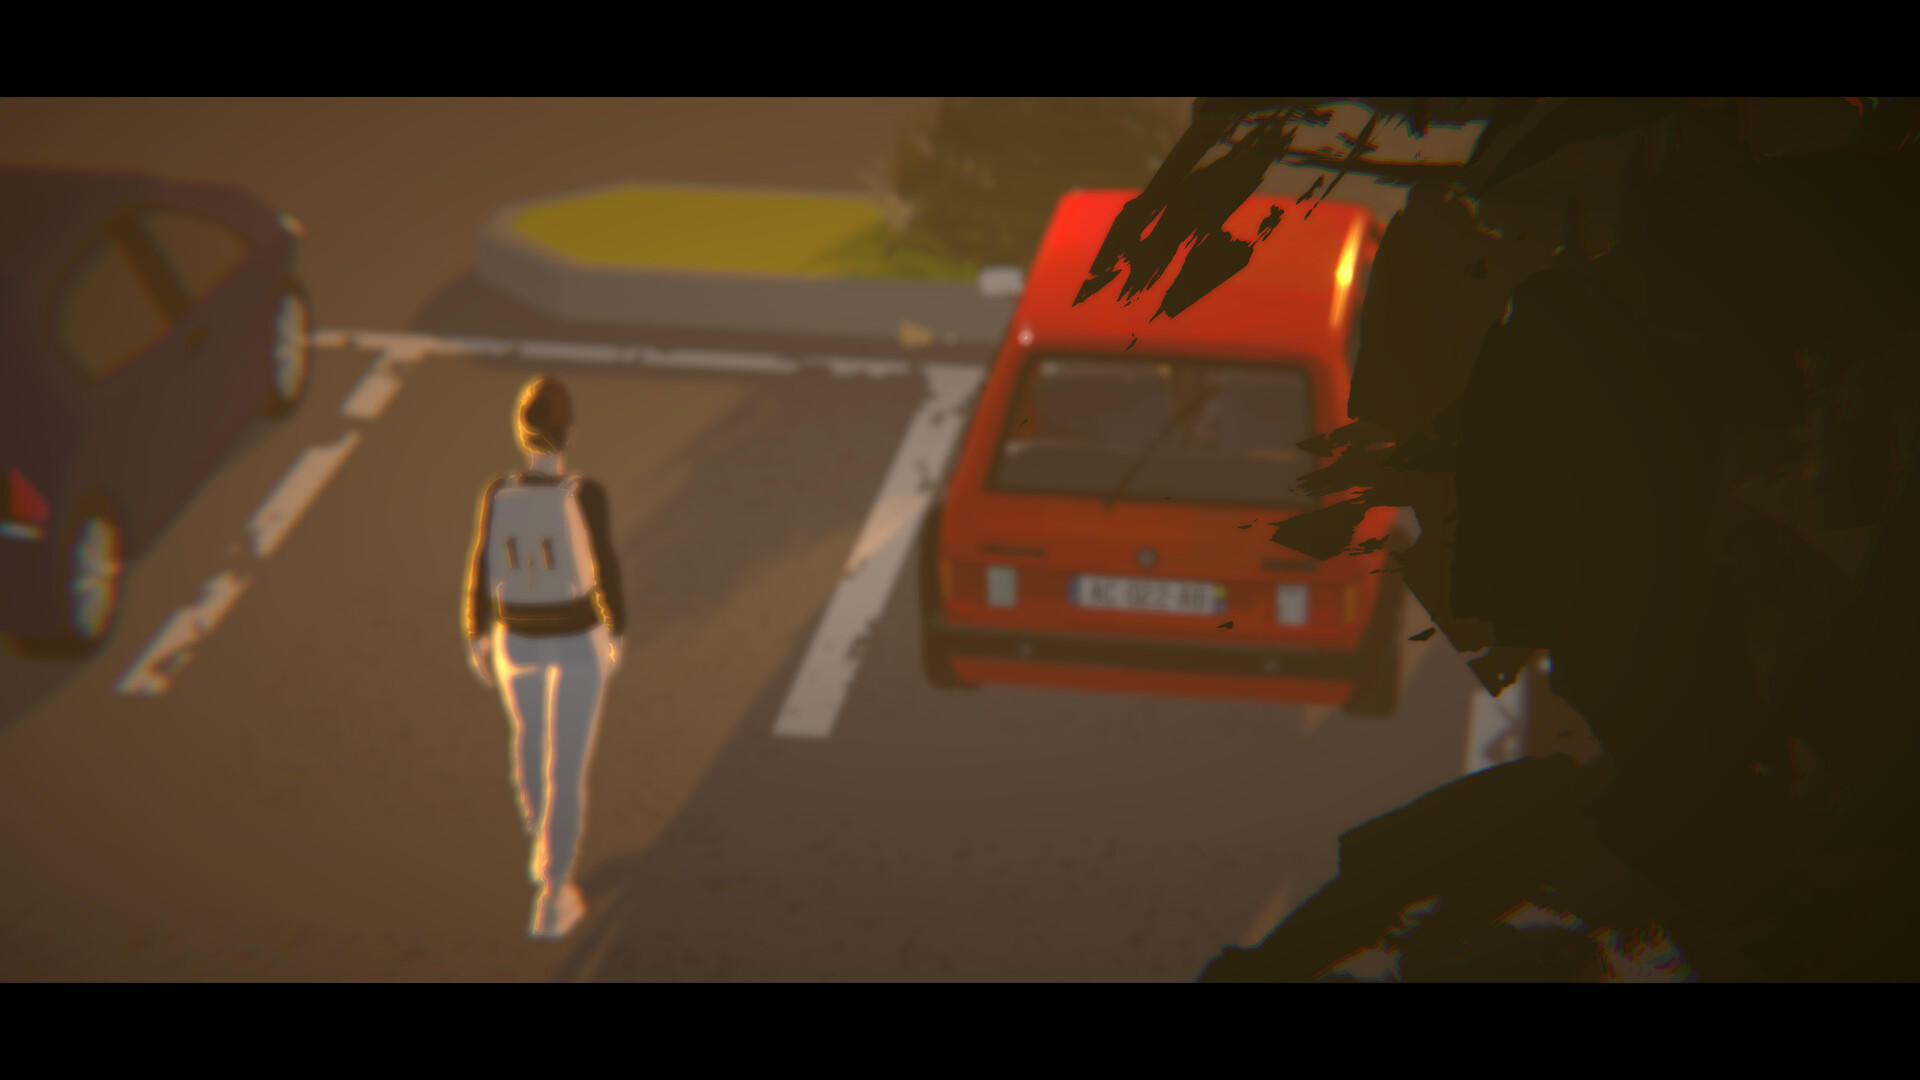 The Wreck screenshot game